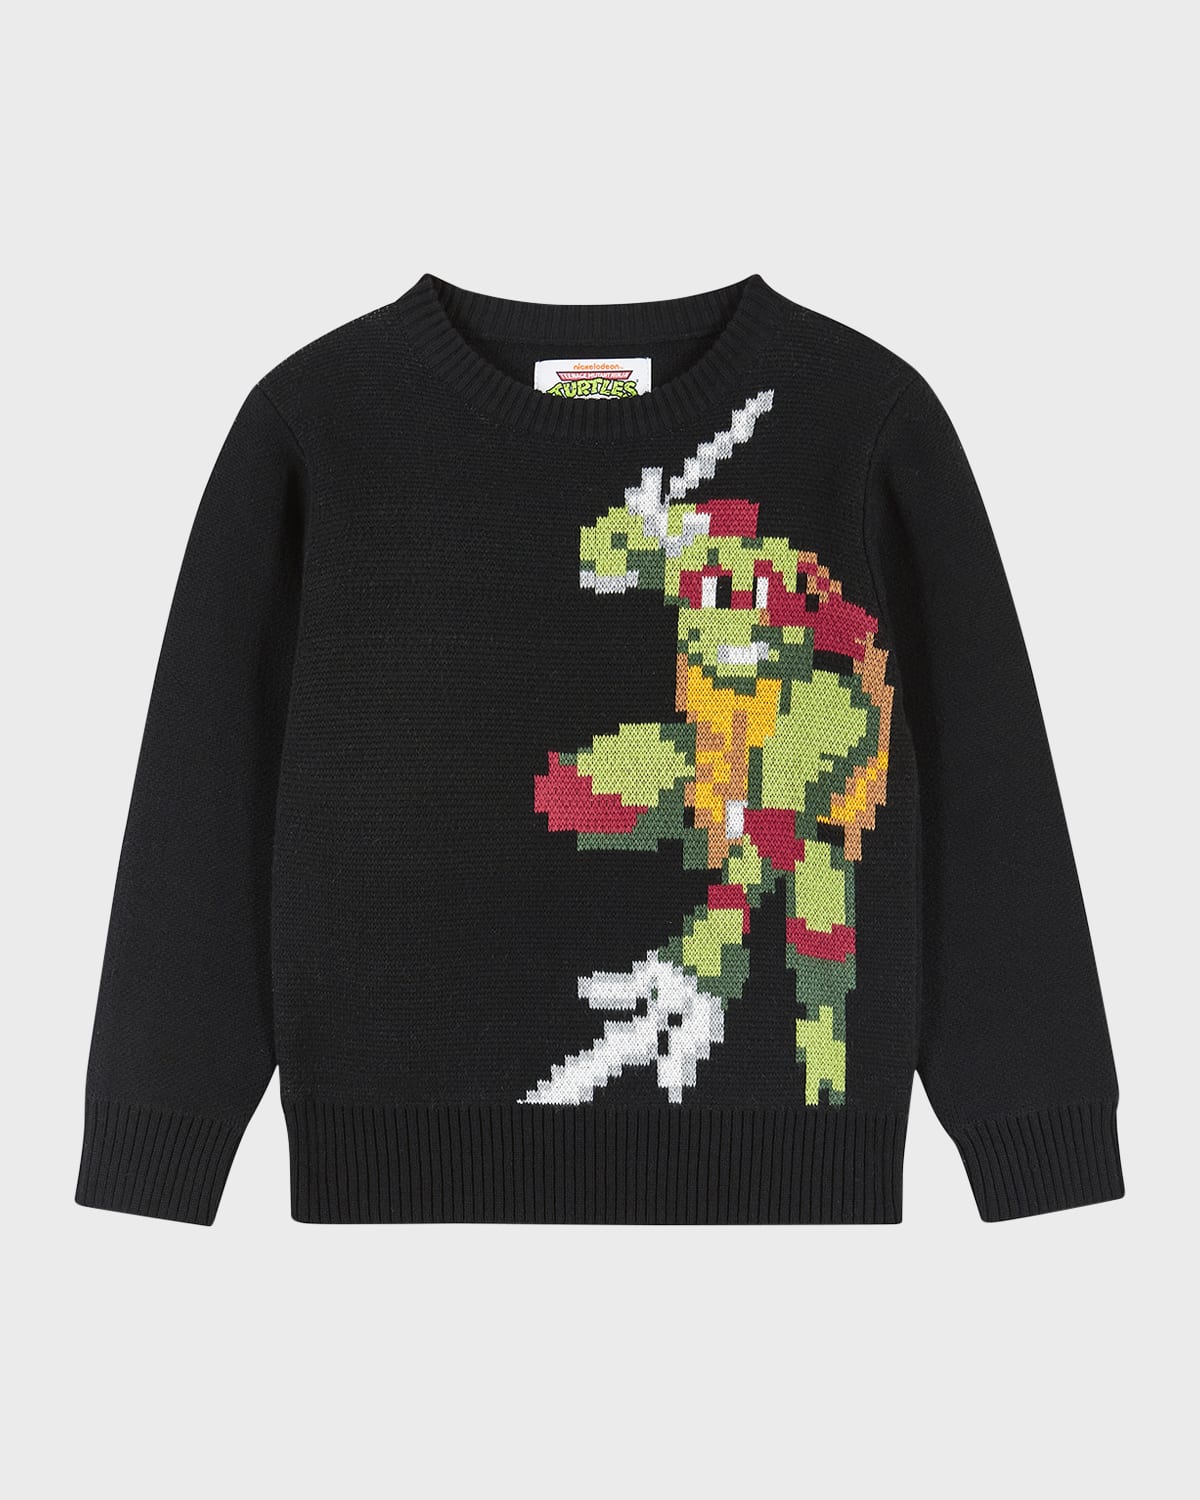 Andy & Evan X Teenage Mutant Ninja Turtles Jacquard Sweater In Black Cin